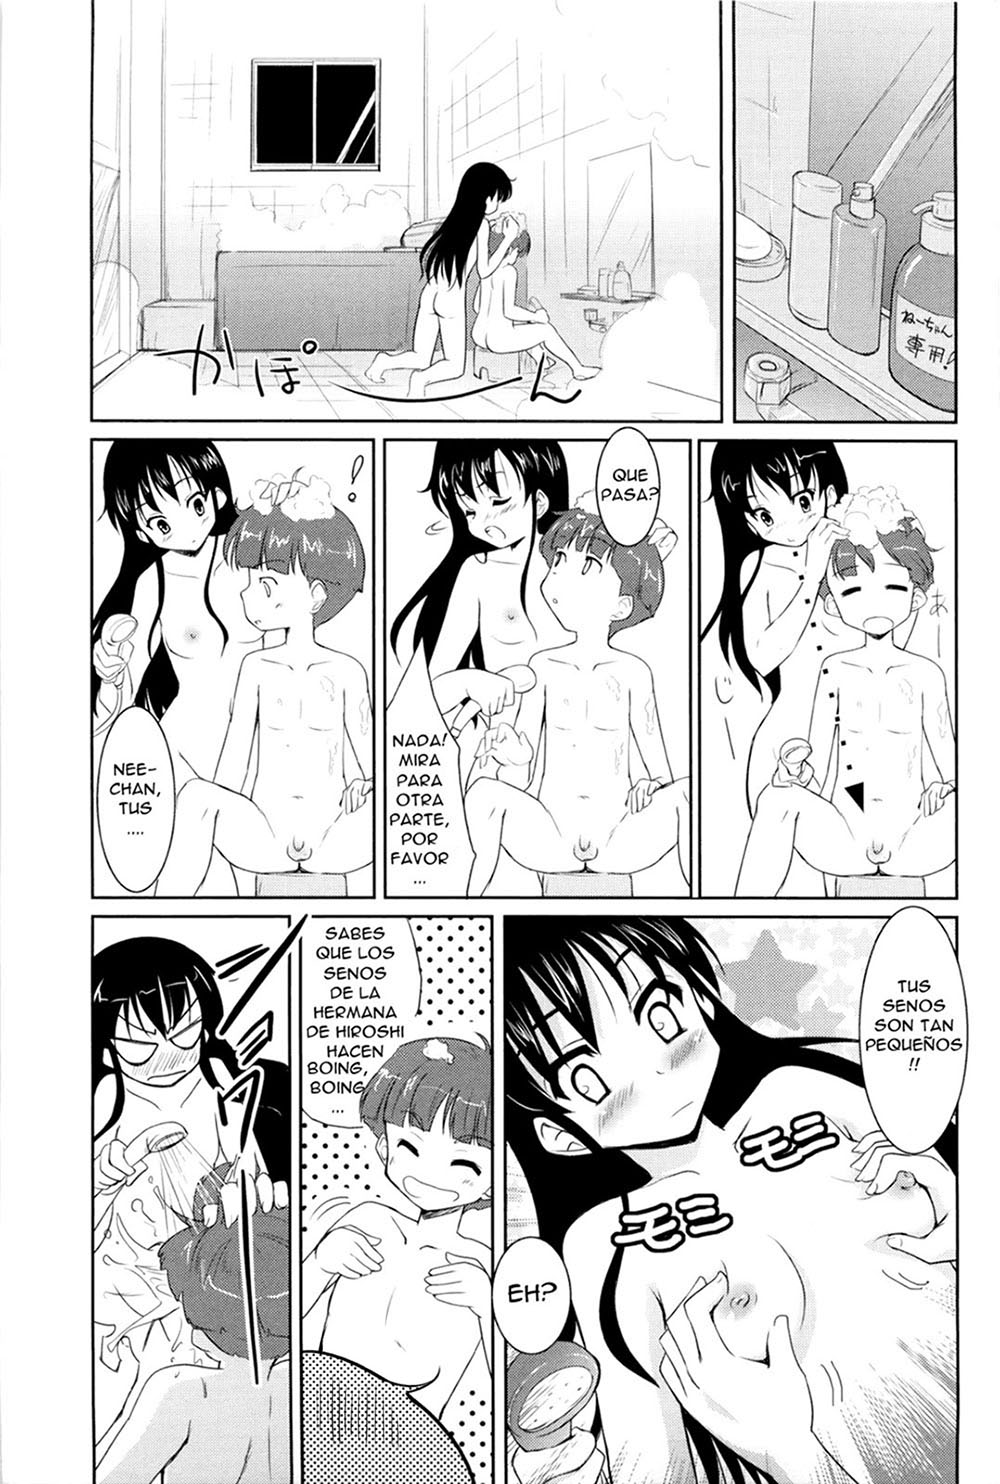 Violando a mi Hermana en el Baño - 3 - Comics Porno - Hentai Manga - Cartoon XXX